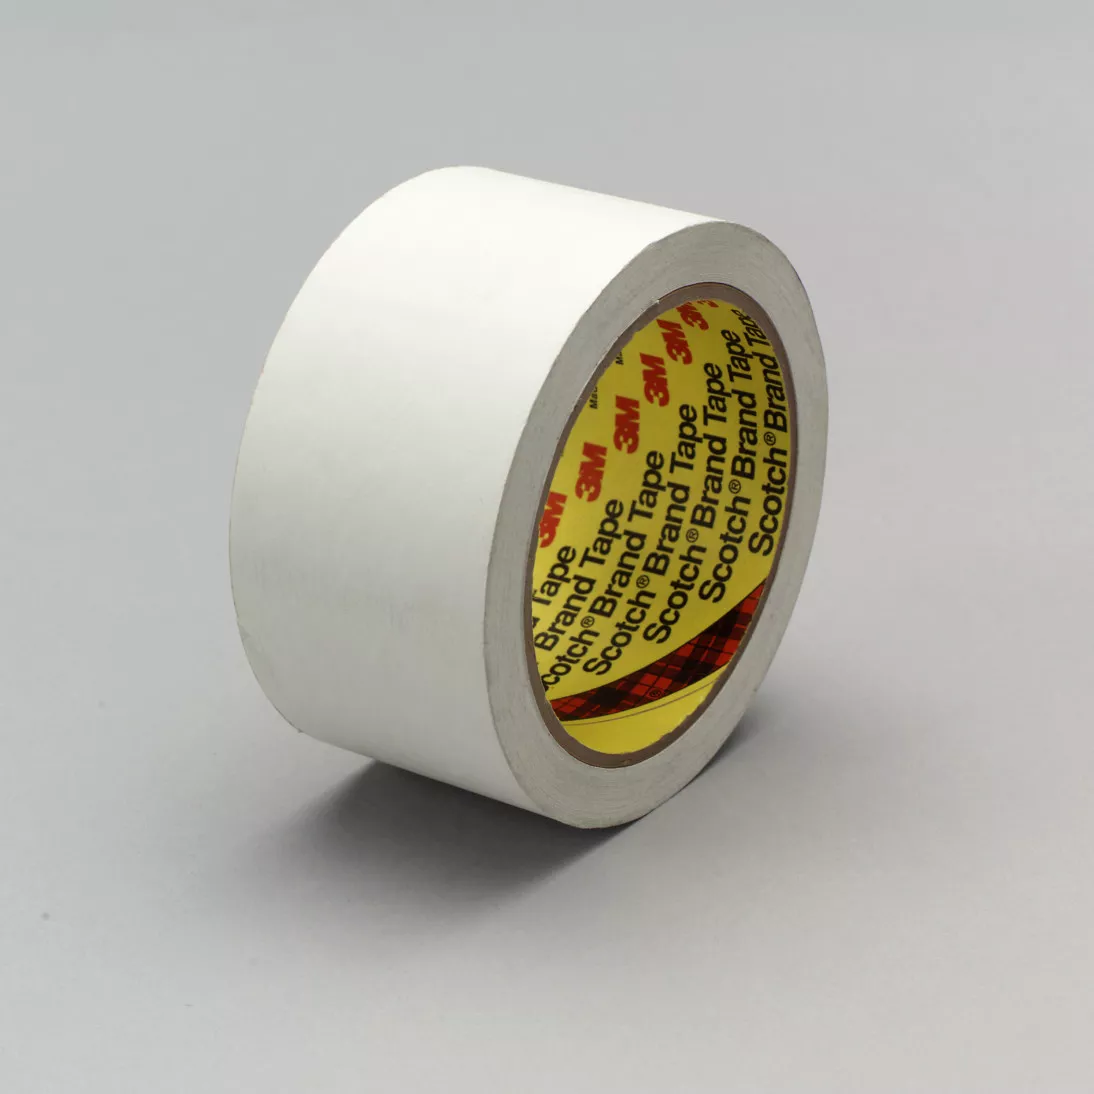 3M™ Low Tack Paper Tape 3051, White, 1/2 in x 36 yd, 3.3 mil, 72 rolls
per case